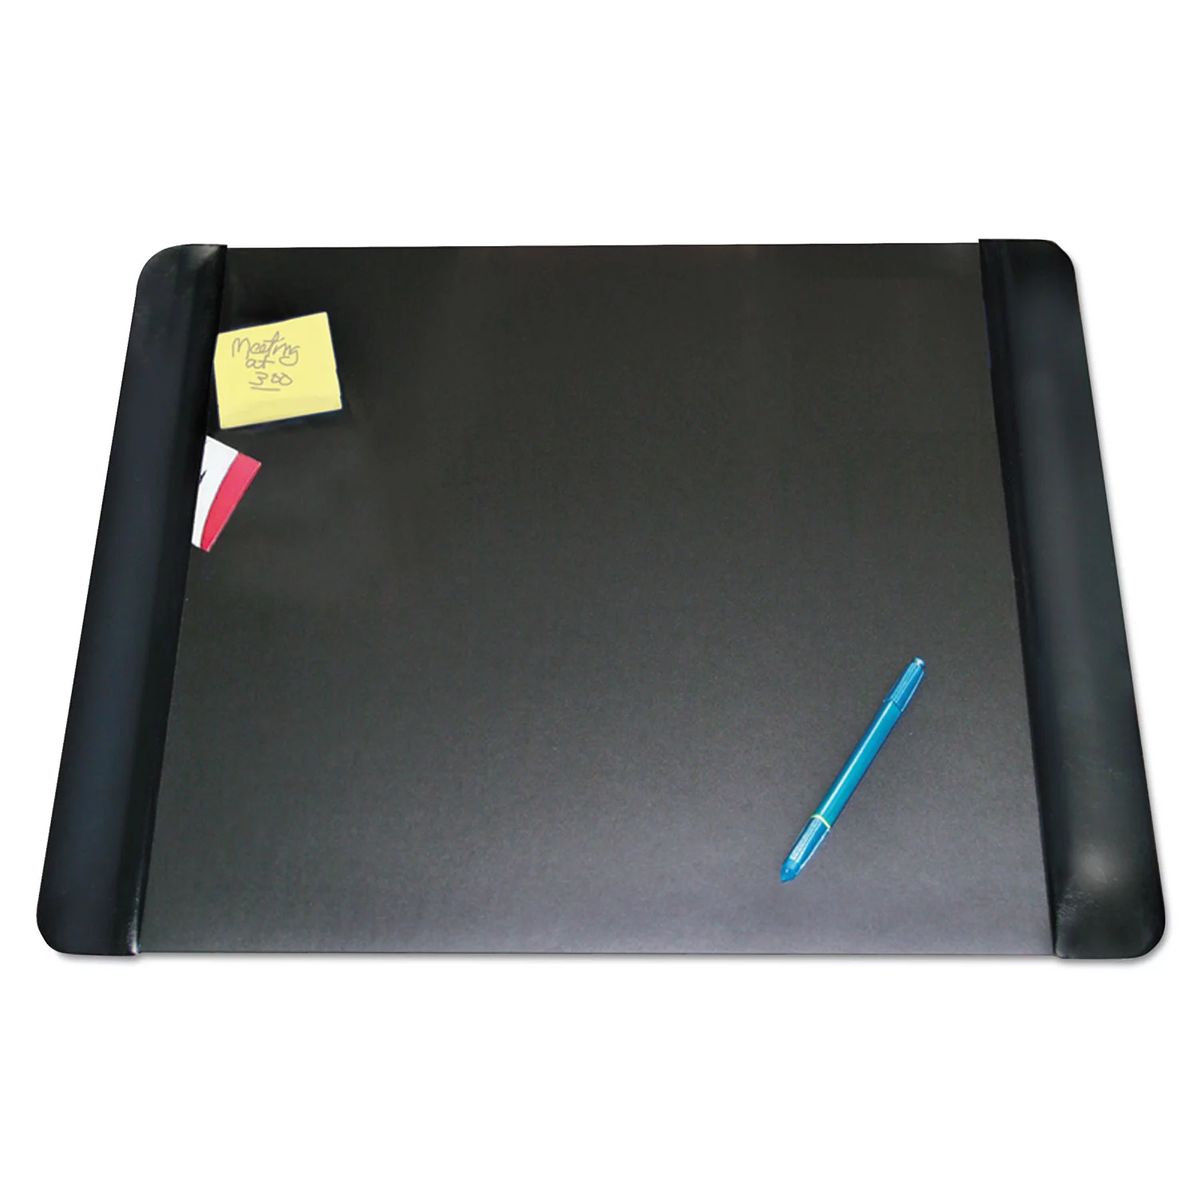 楽天Walmart 楽天市場店[RDY] [送料無料] Artistic Executive Desk Pad with Leather-Like Side Panel, 24 x 19, Black [楽天海外通販] | Artistic Executive Desk Pad with Leather-Like Side Panels, 24 x 19, Black